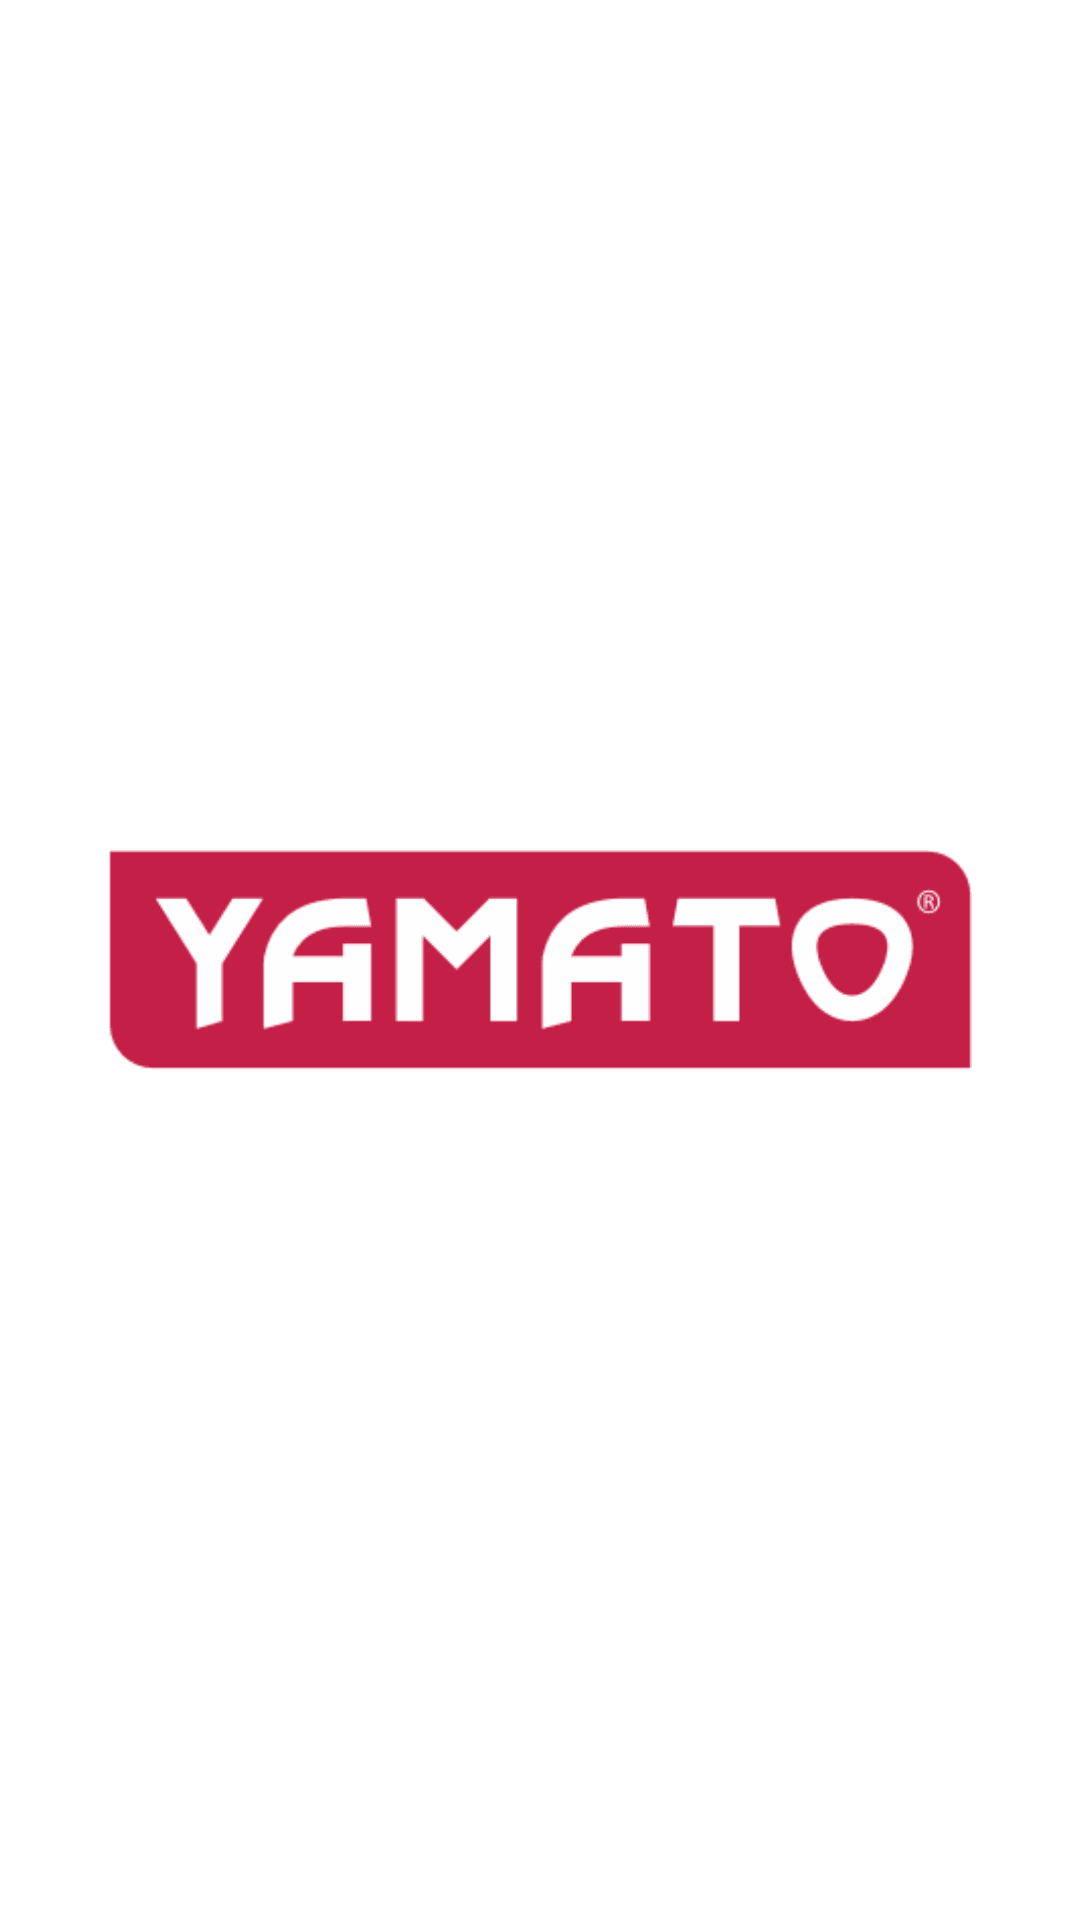 Yamato - Mola abrasiva per affilacatene 094507 - Pisan Ferramenta